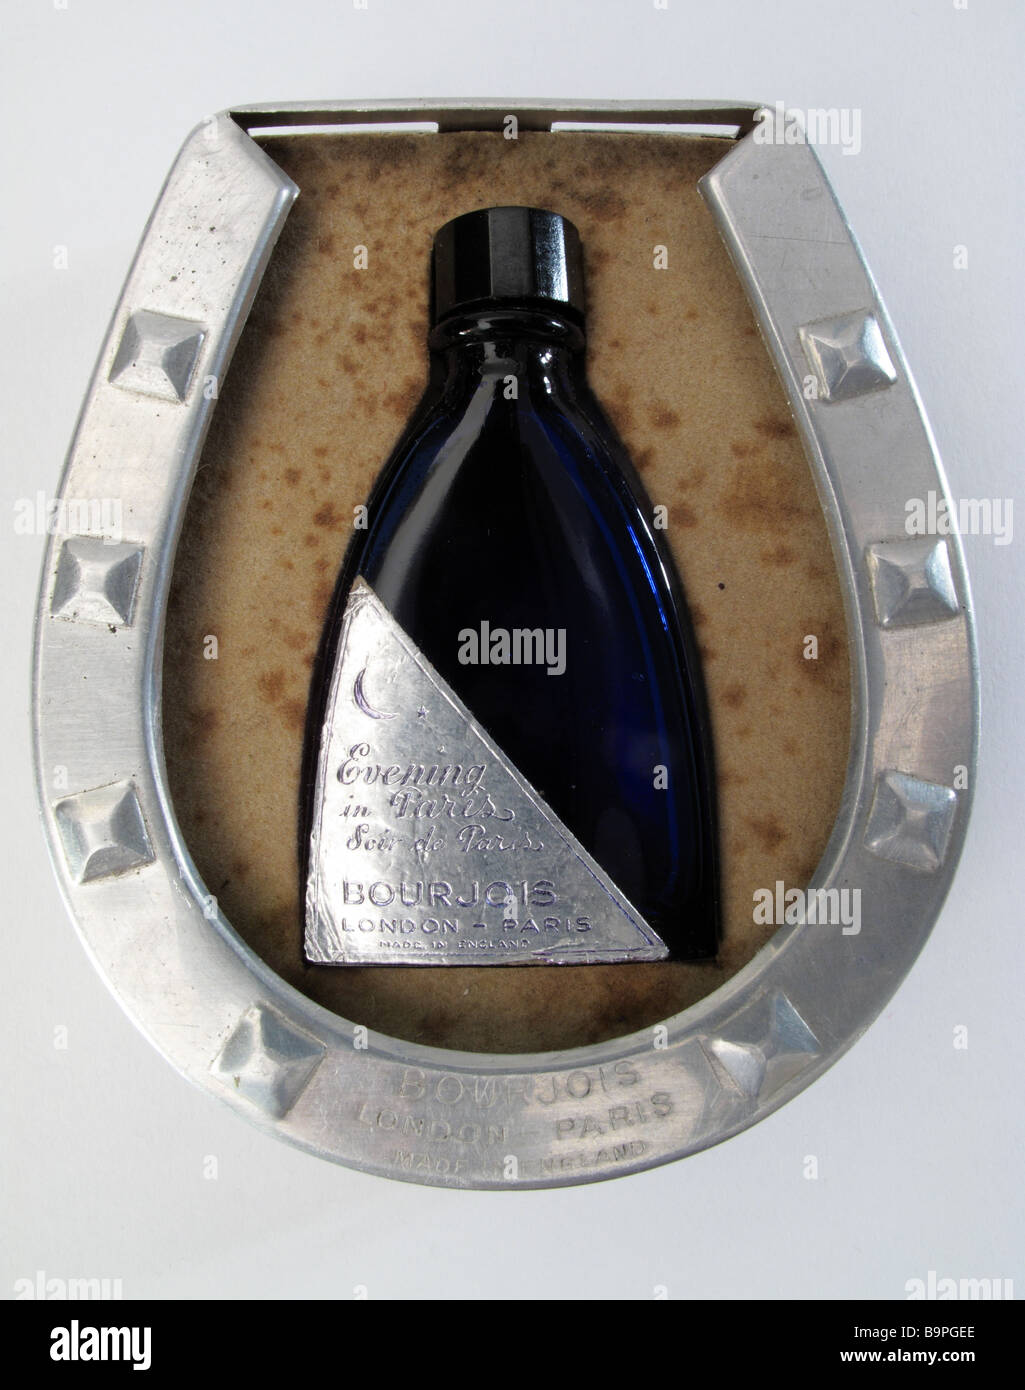 Bourjois velada parisina frasco de perfume en contenedor de herradura de mediados del siglo XX. Foto de stock